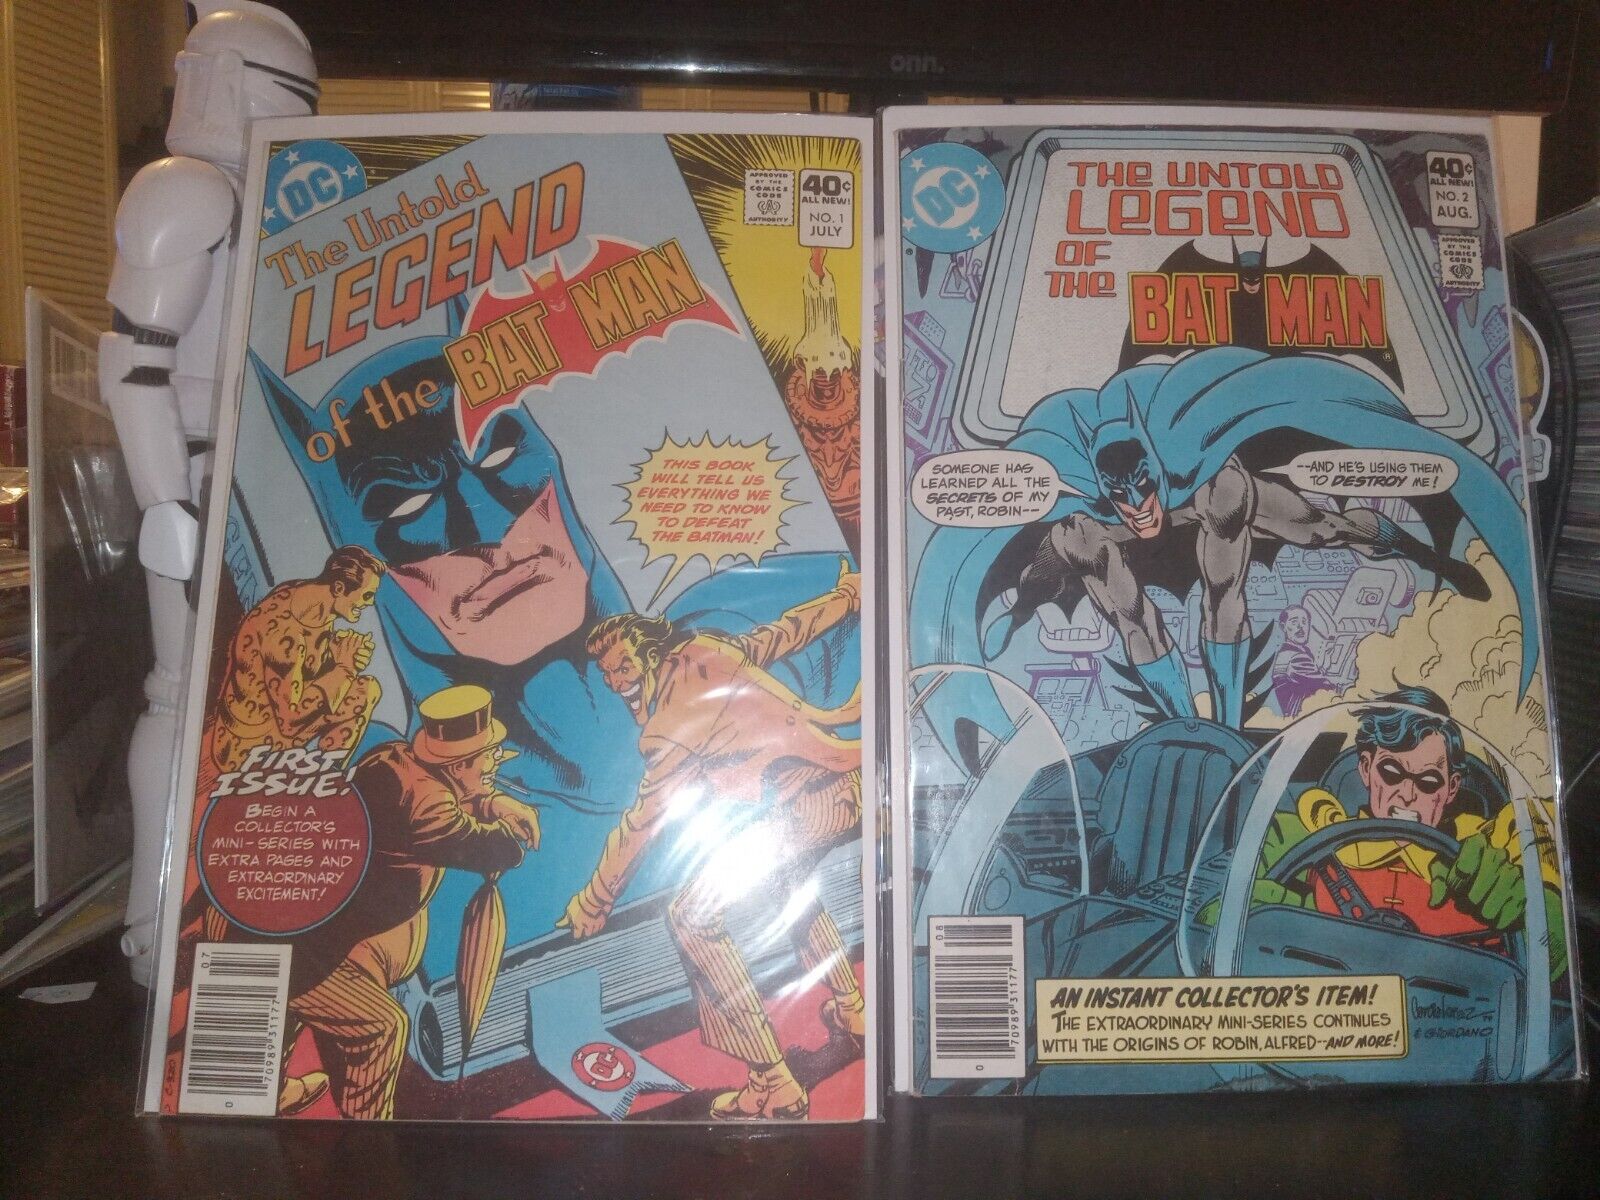 The Untold Legend of the Batman #1 - 3 Complete Mini Series (DC Comics - 1980)